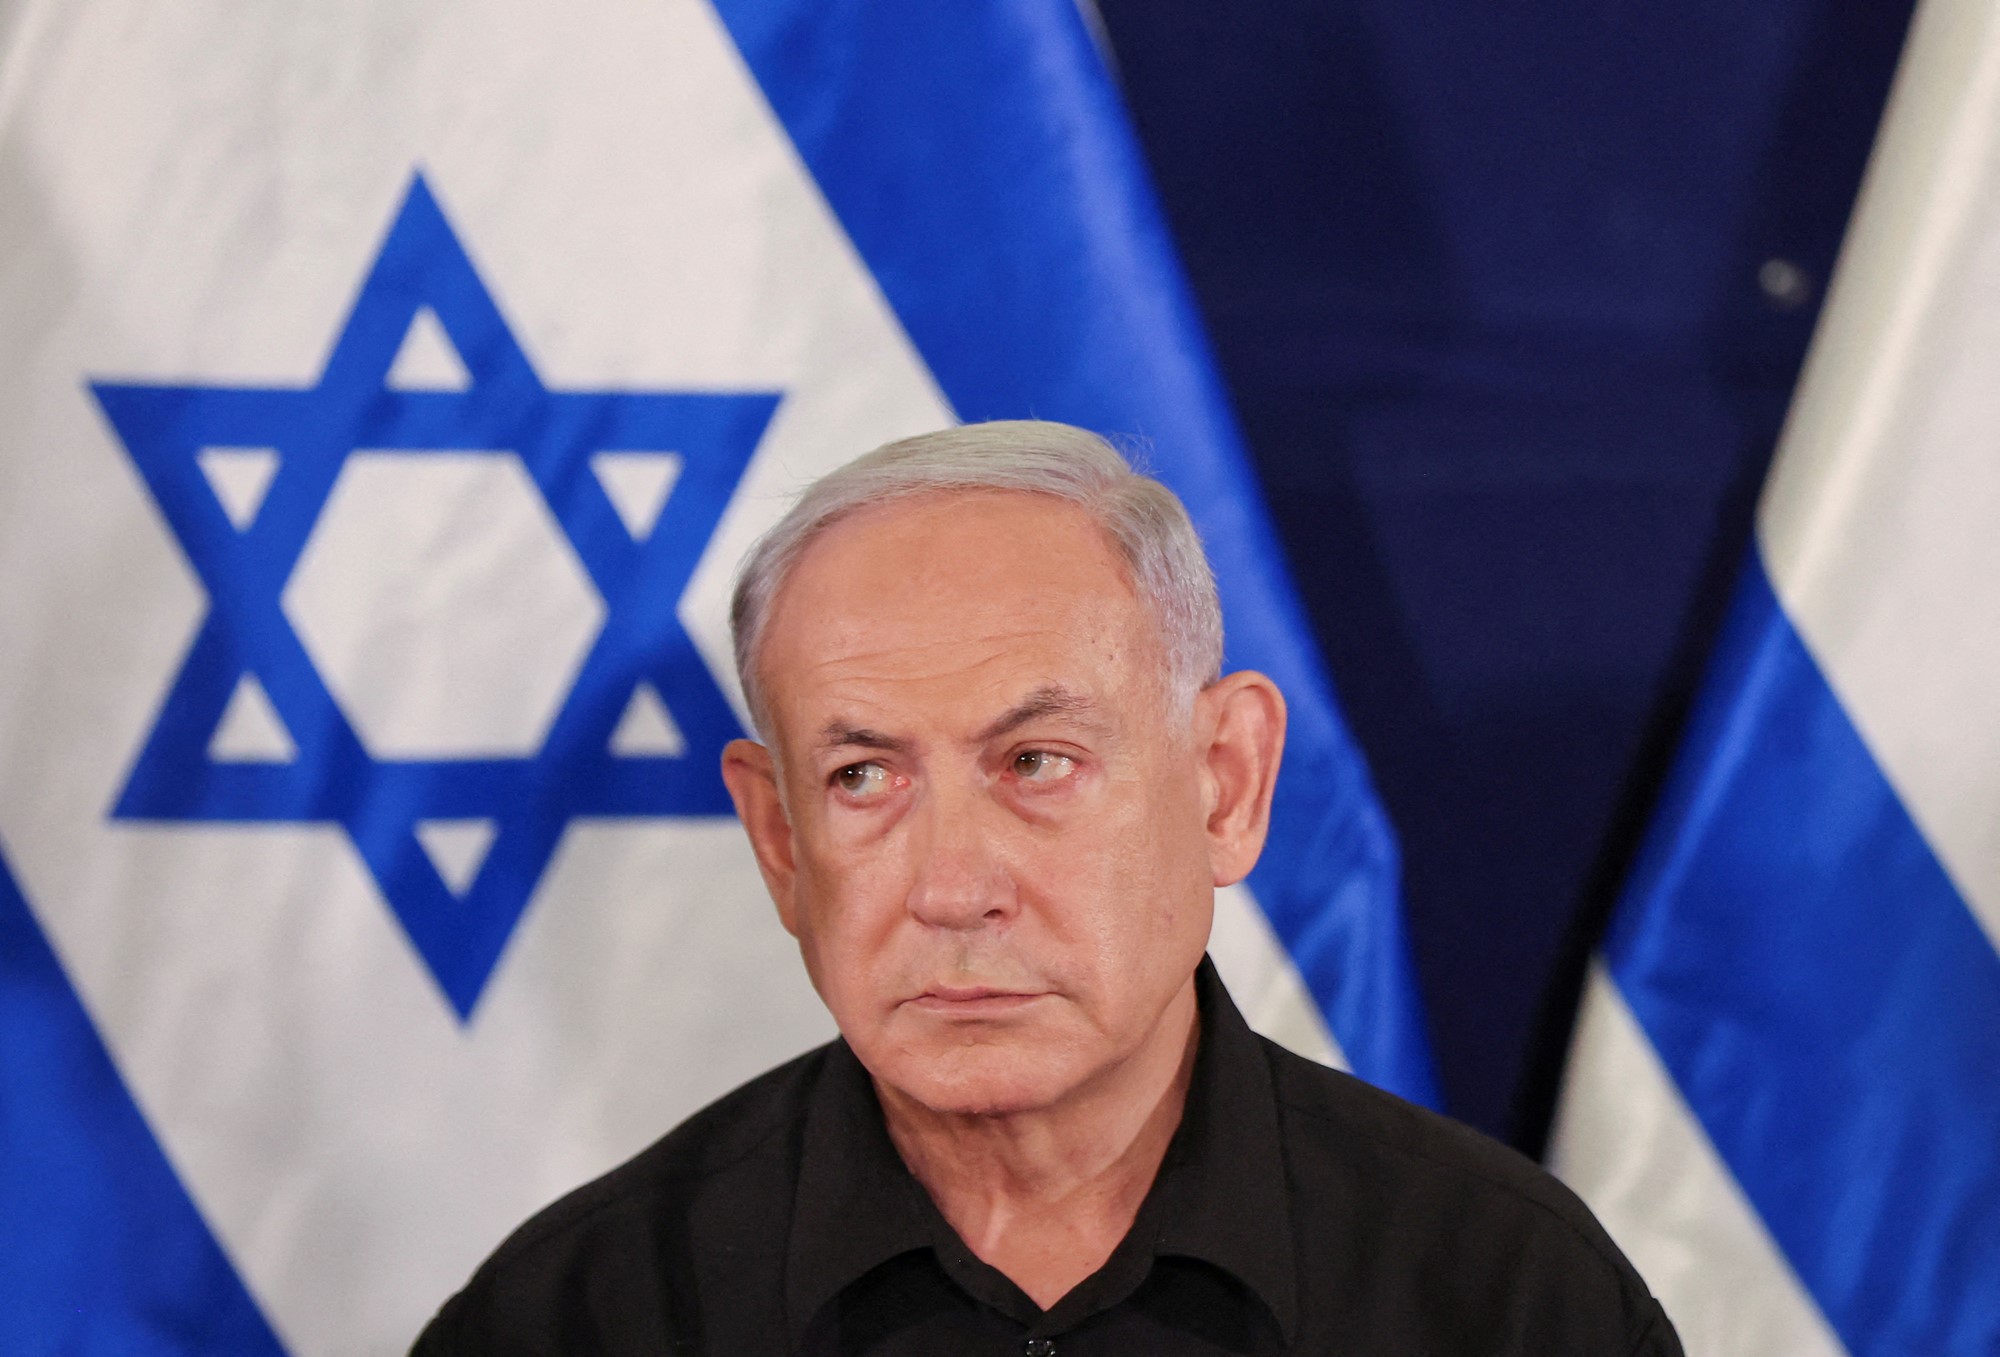 Israeli prime minister Benjamin Netanyahu during a press conference in October.